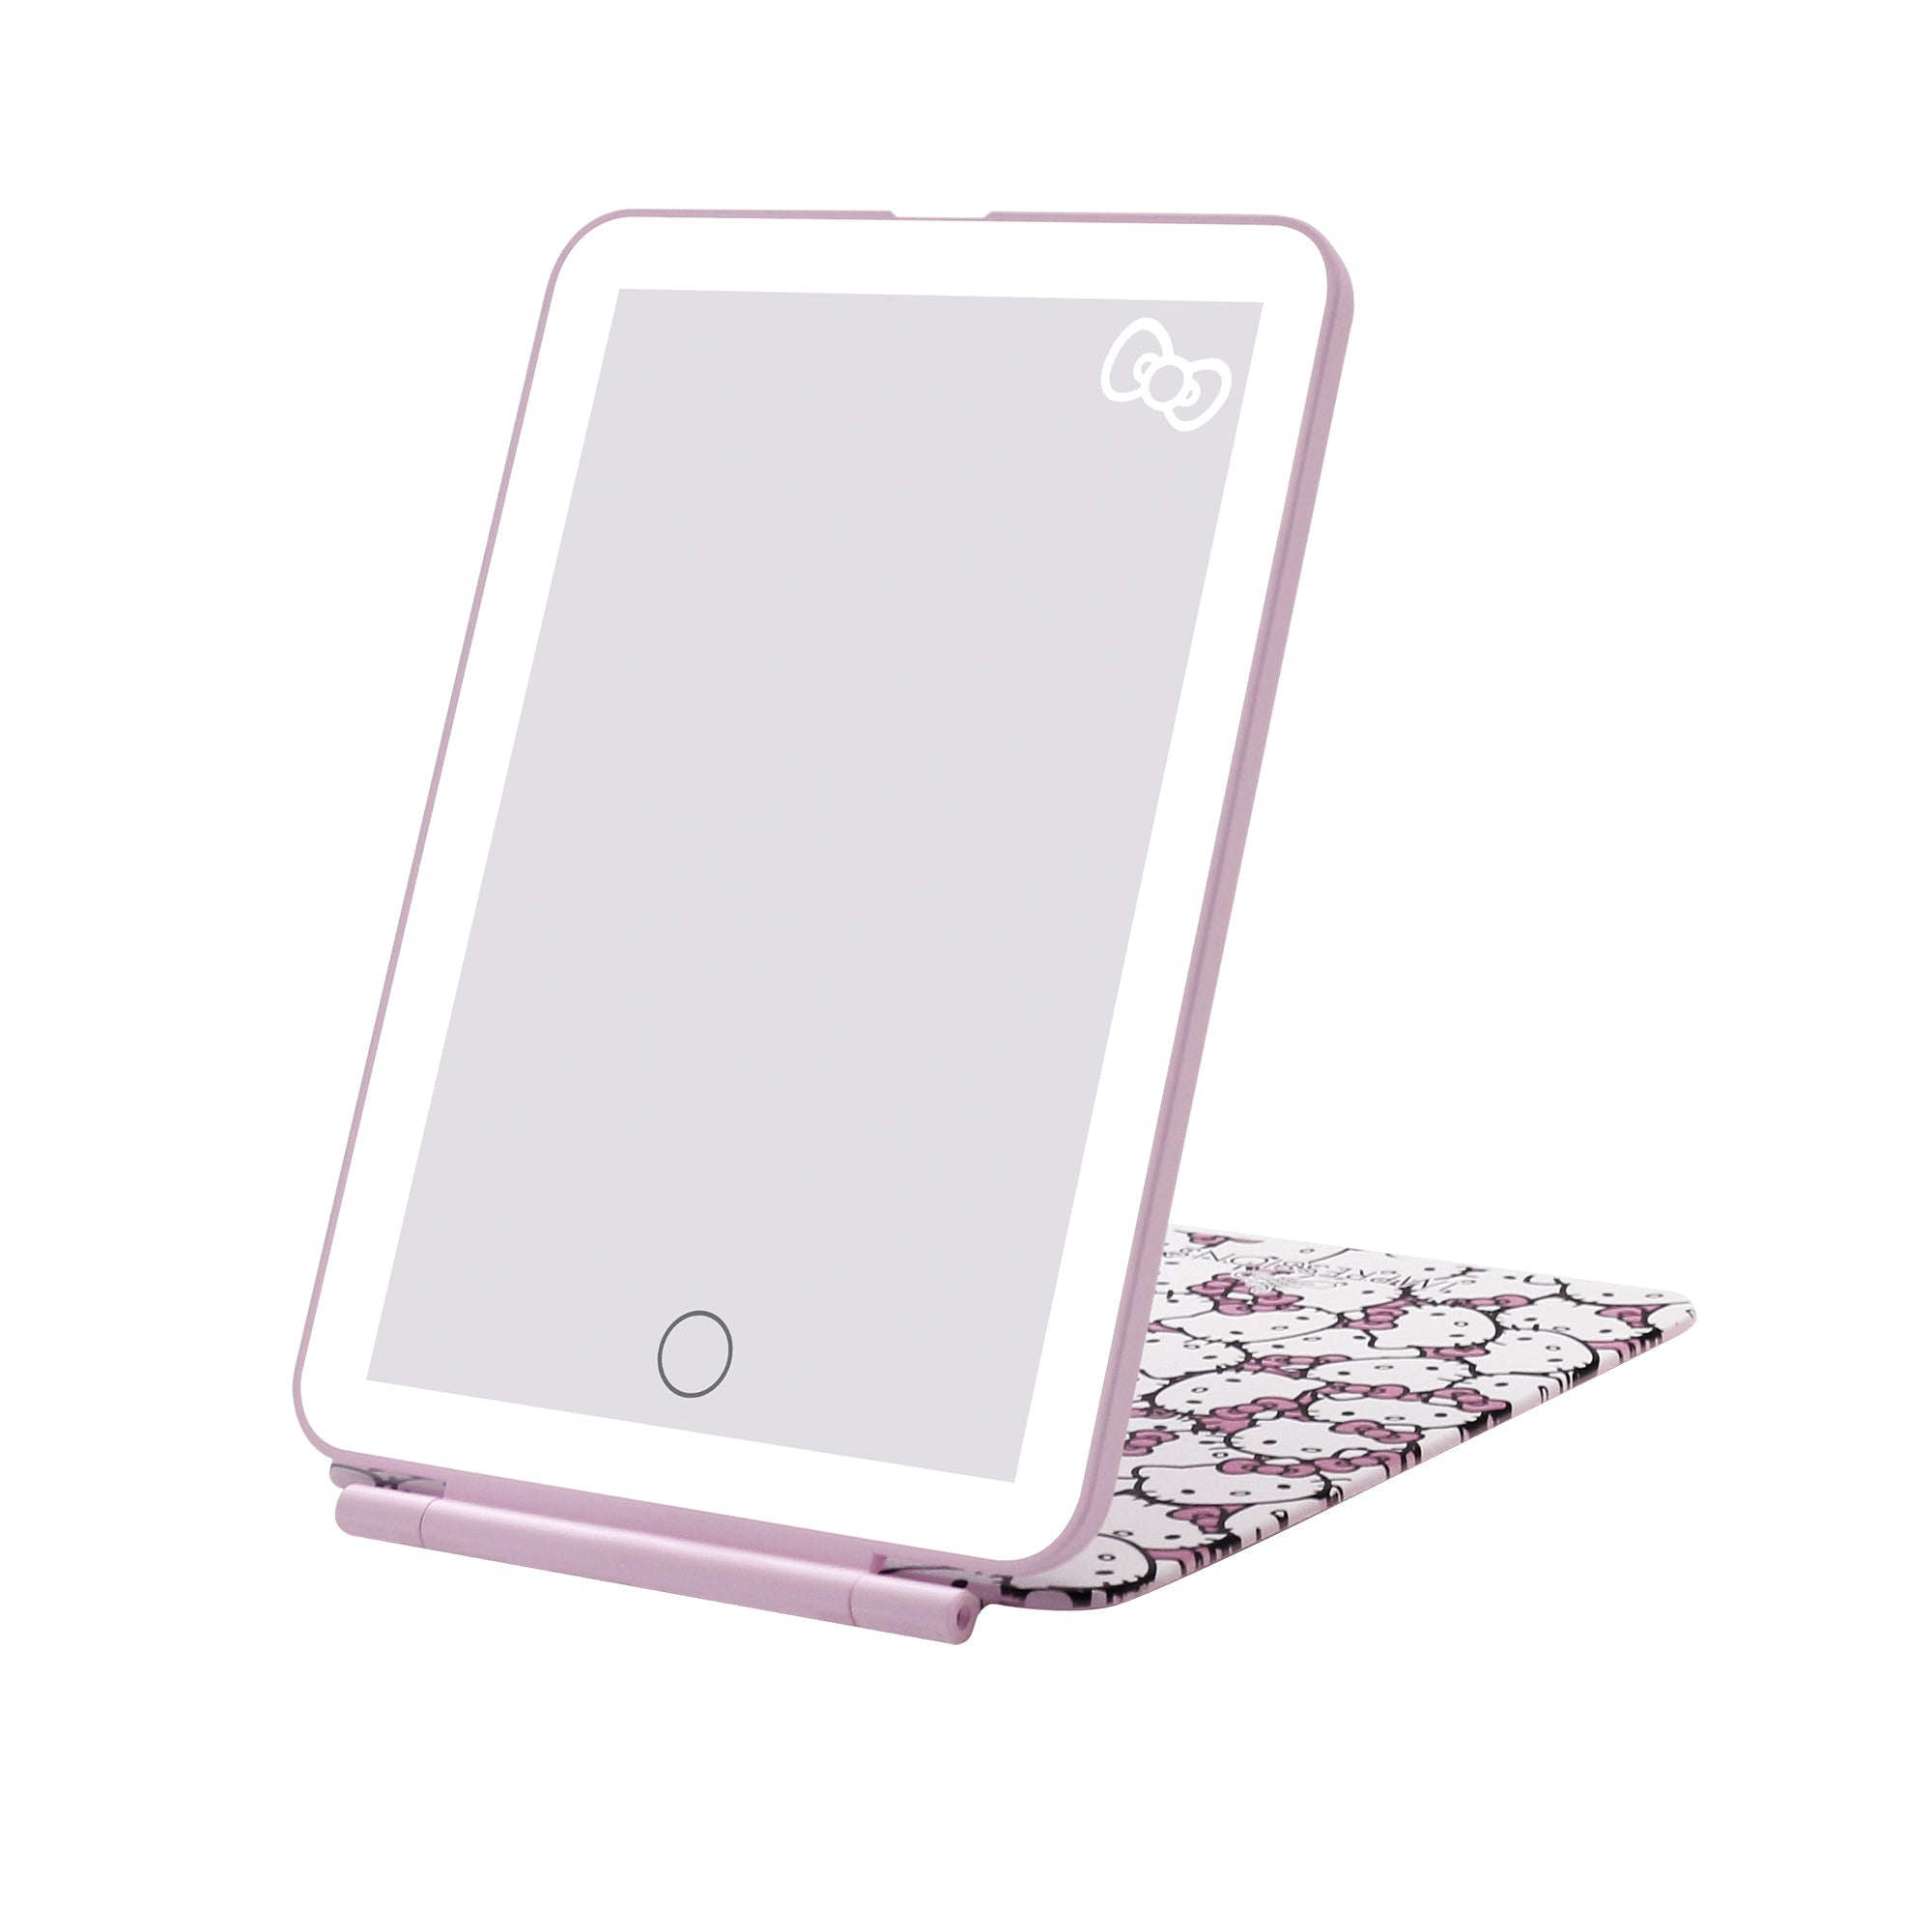 Impressions Vanity Hello Kitty (White/Pink) Touch Pad Mini Tri-Tone LED Makeup Mirror / Pink/White